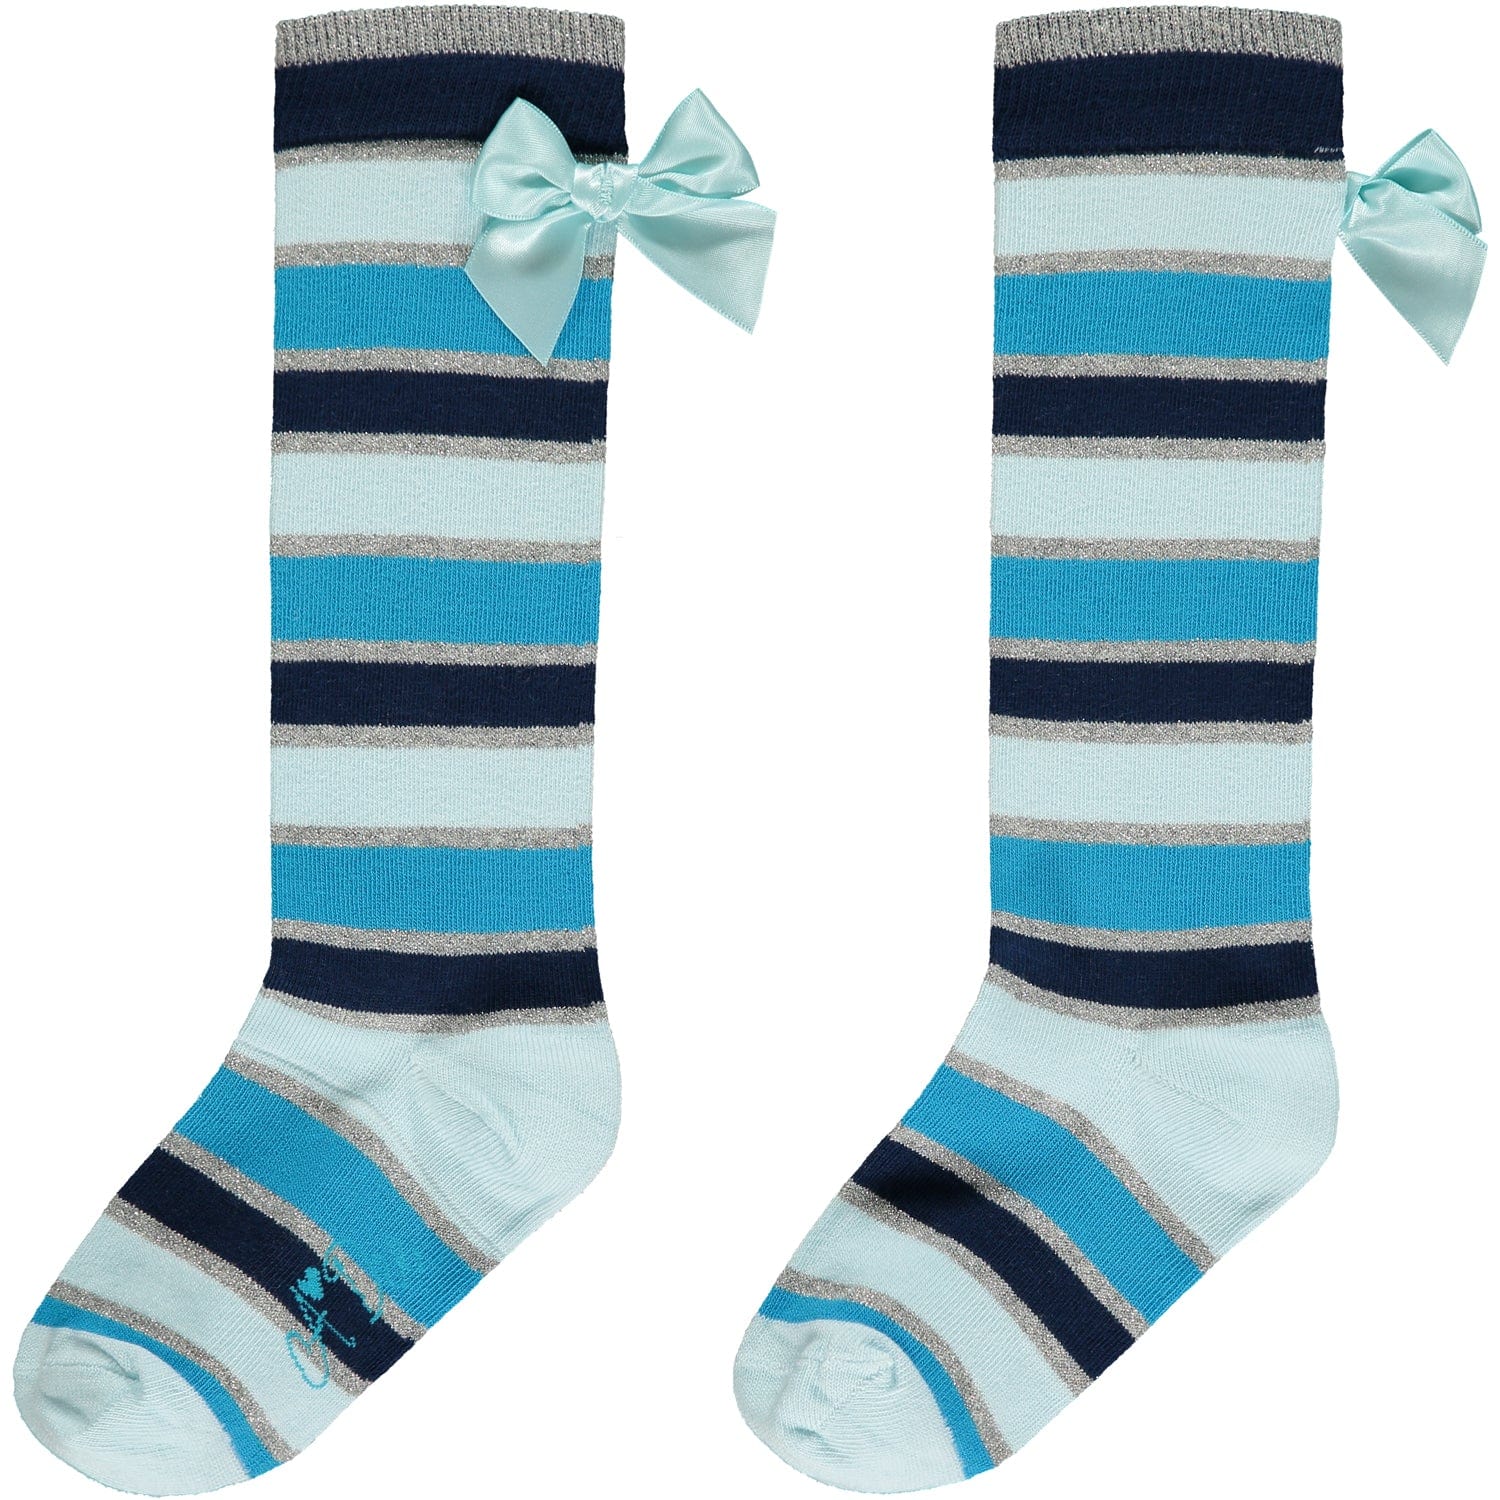 A DEE - Mr Unicorn Darwin Stripe Knee High Socks - Aqua